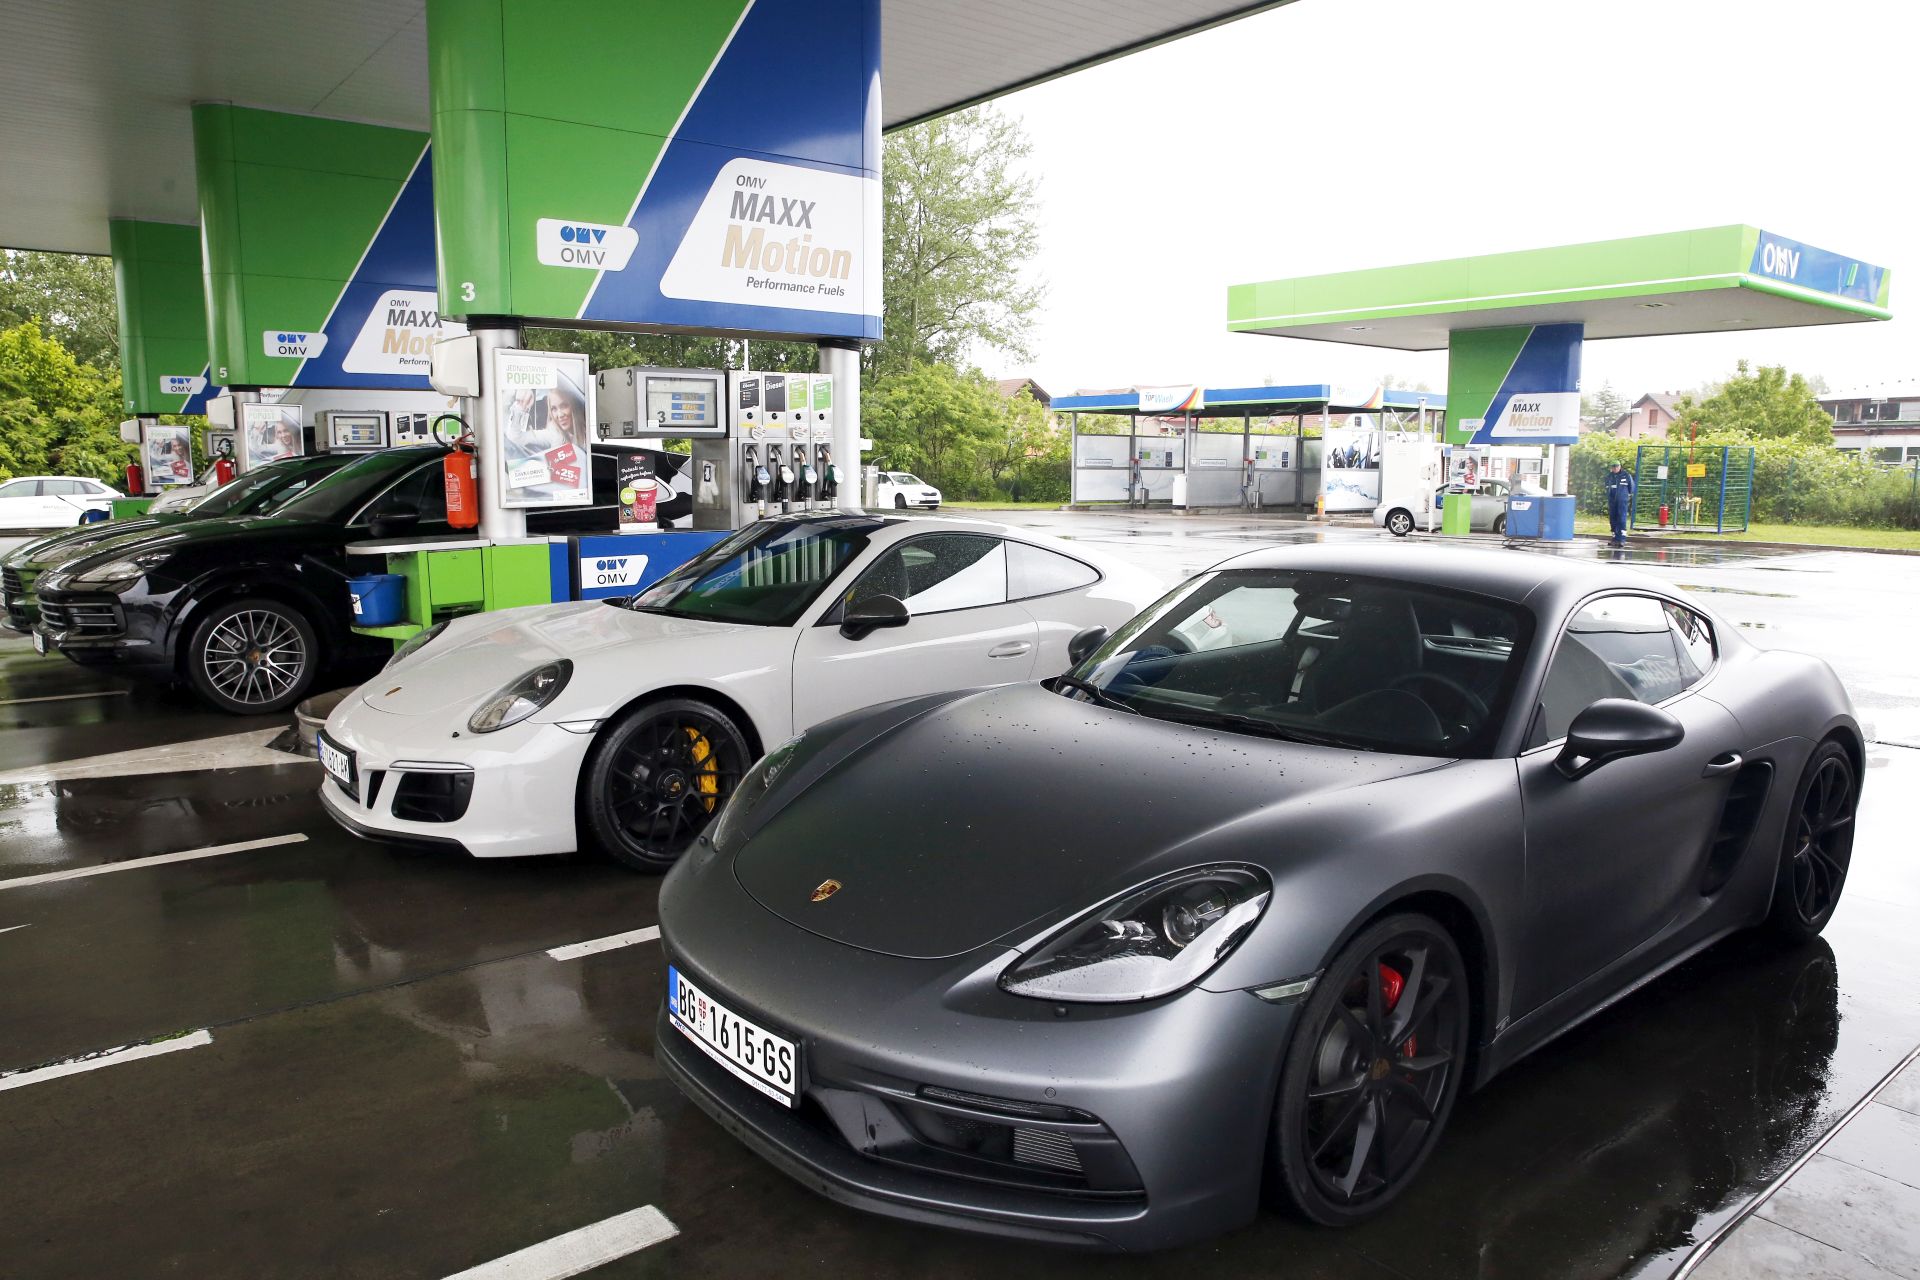 Četverac modela najviše klase marke Porsche,koji ostavlja bez daha, natočio gorivo na renoviranoj OMV pumpi